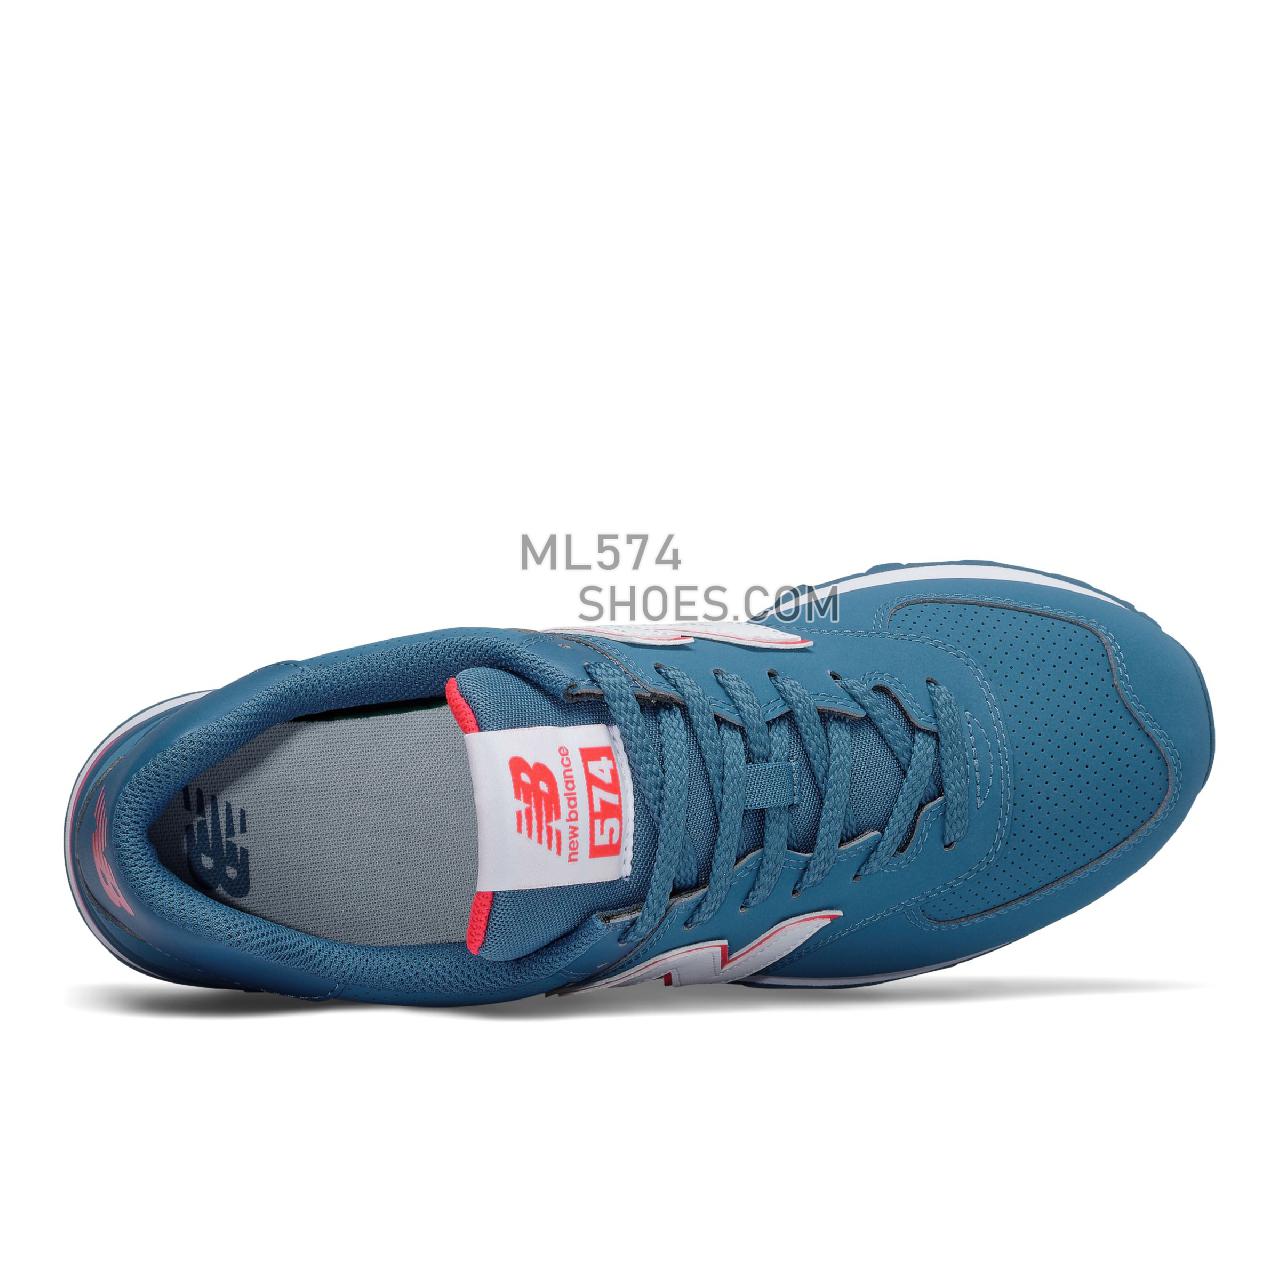 New Balance ML574 - Men's Classic Sneakers - Nb Light Blue with Blaze - ML574EWW